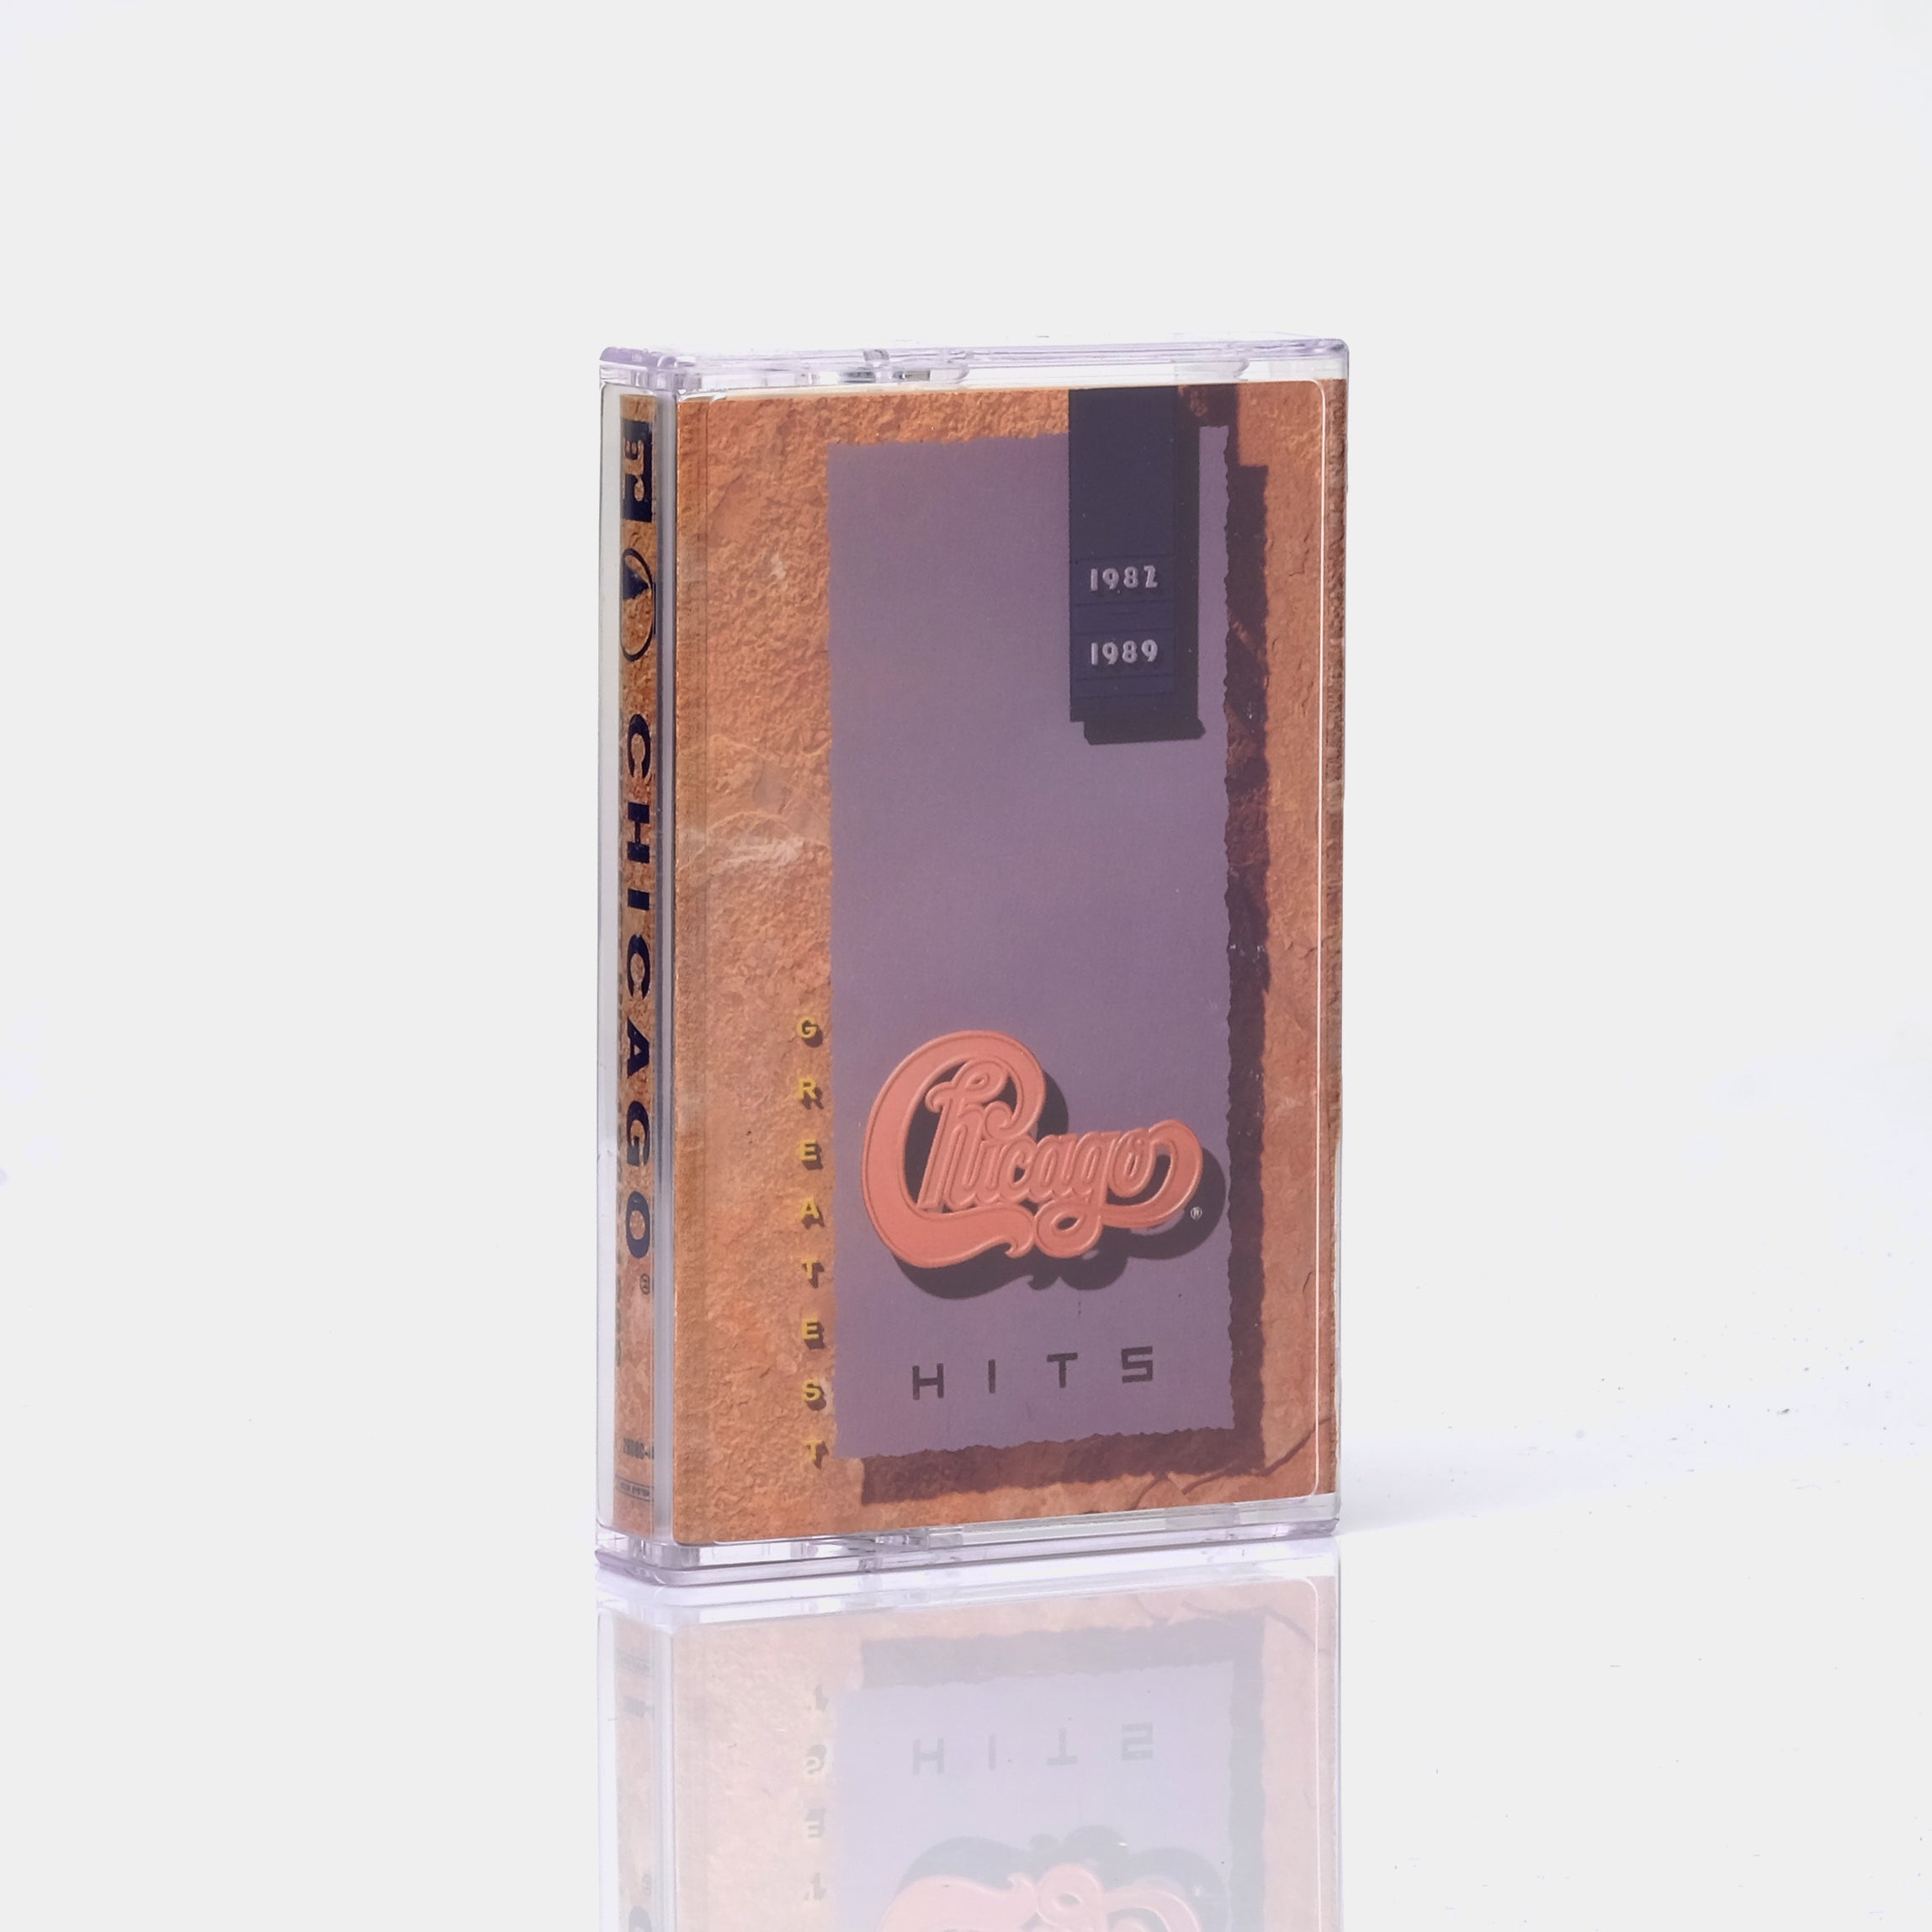 Chicago - Greatest Hits 1982-1989 Cassette Tape